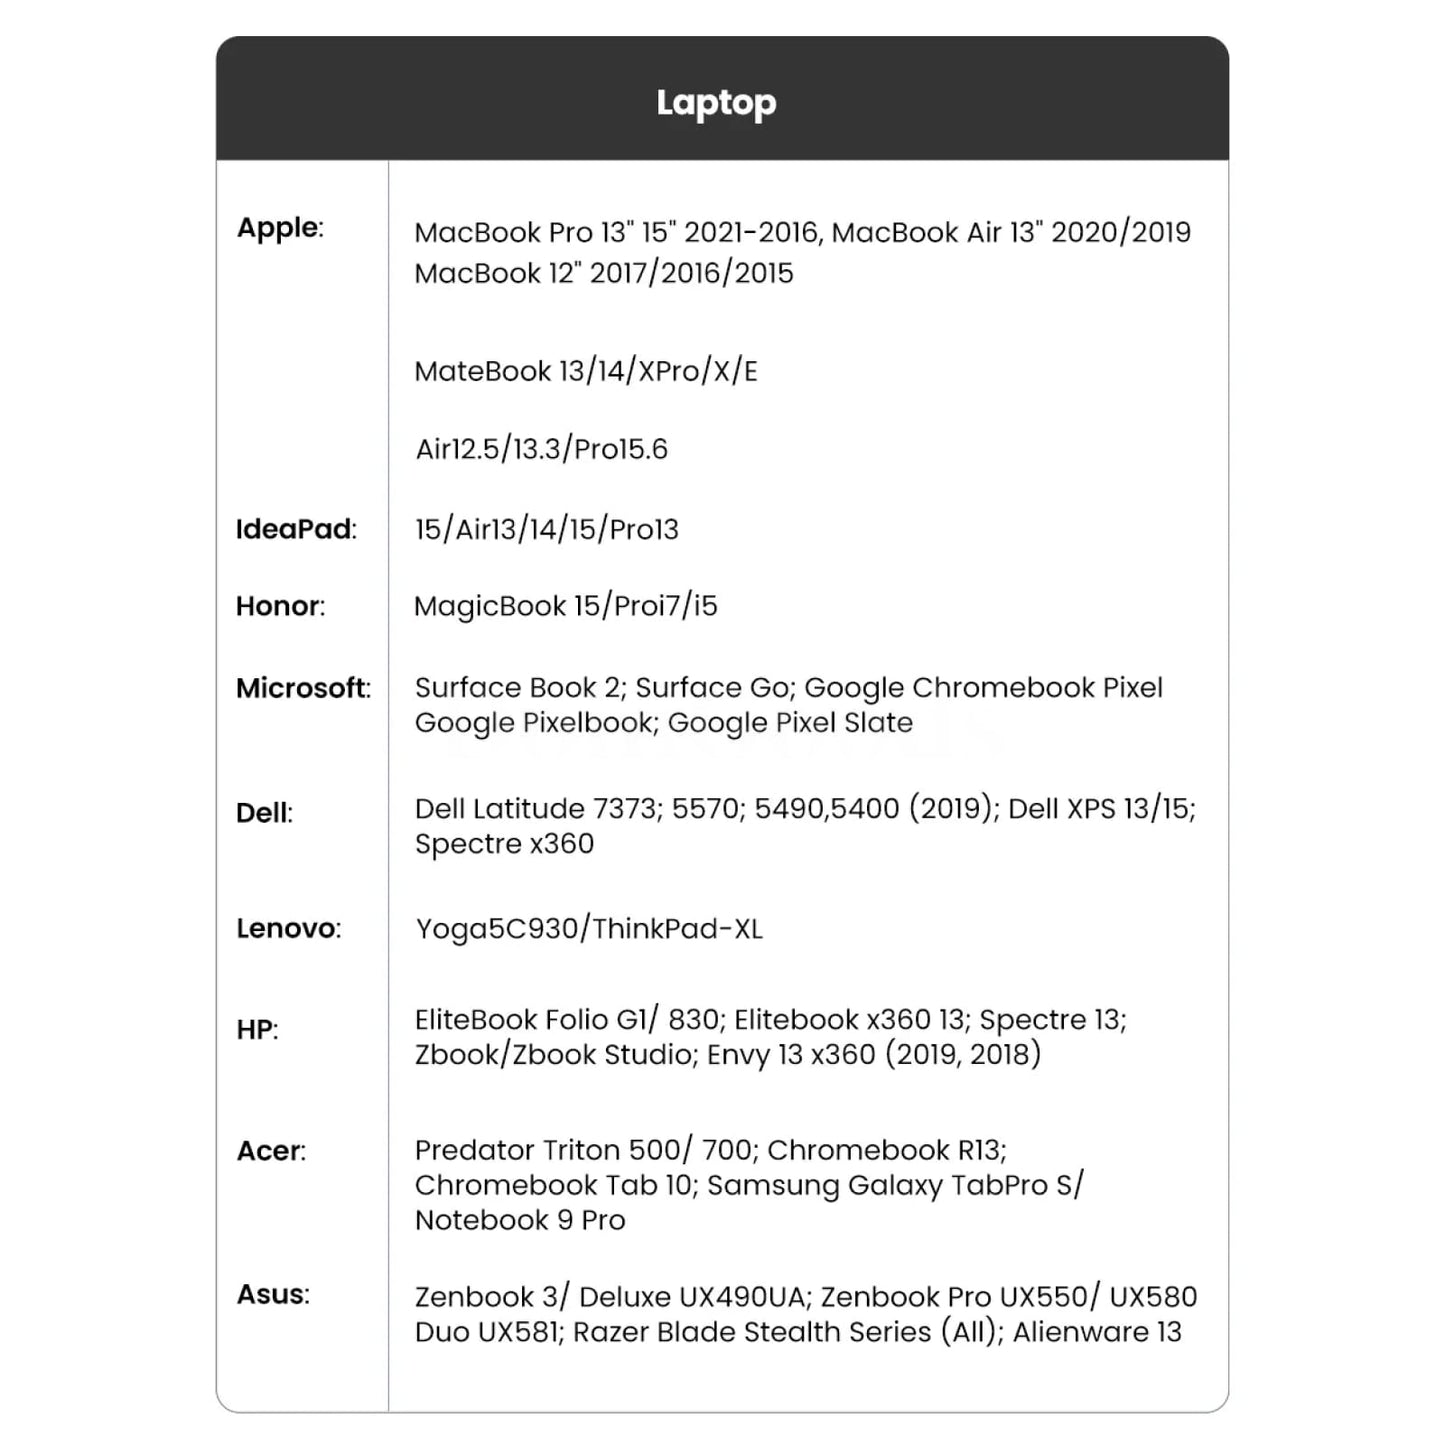 Ugreen 100W Usb Type C Cable Macbook Ipad Samsung Xiaomi Fast Charging Cord 5A 301635